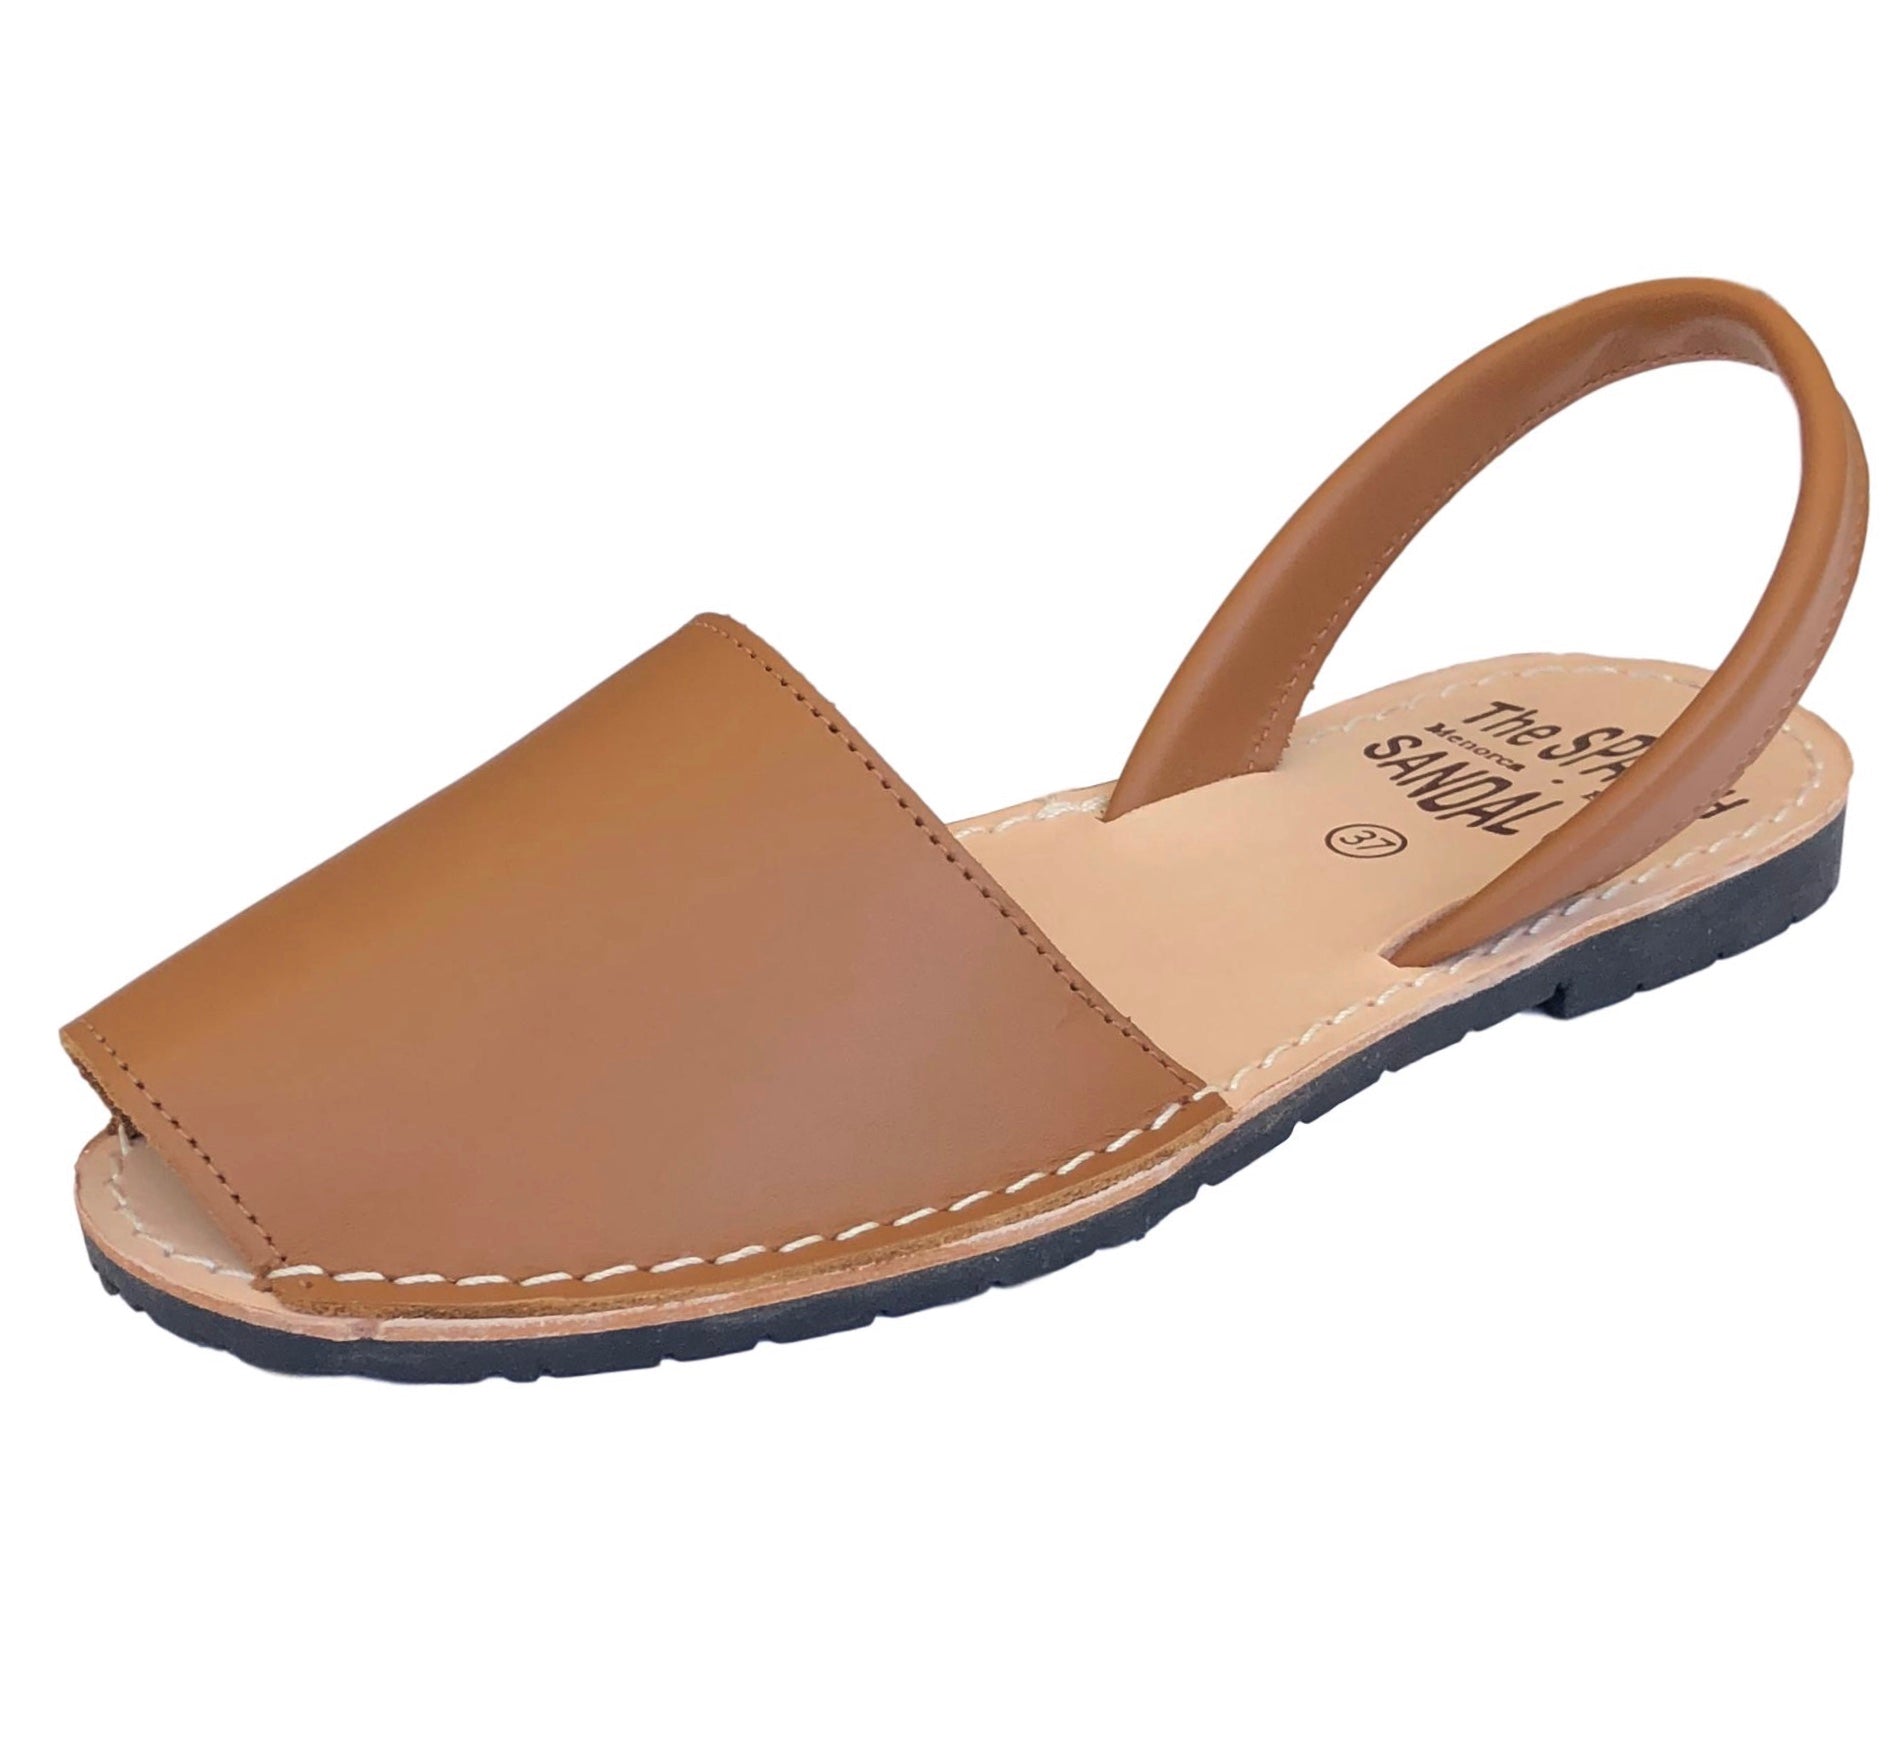 Camel classic Spanish sandals - diagonal view